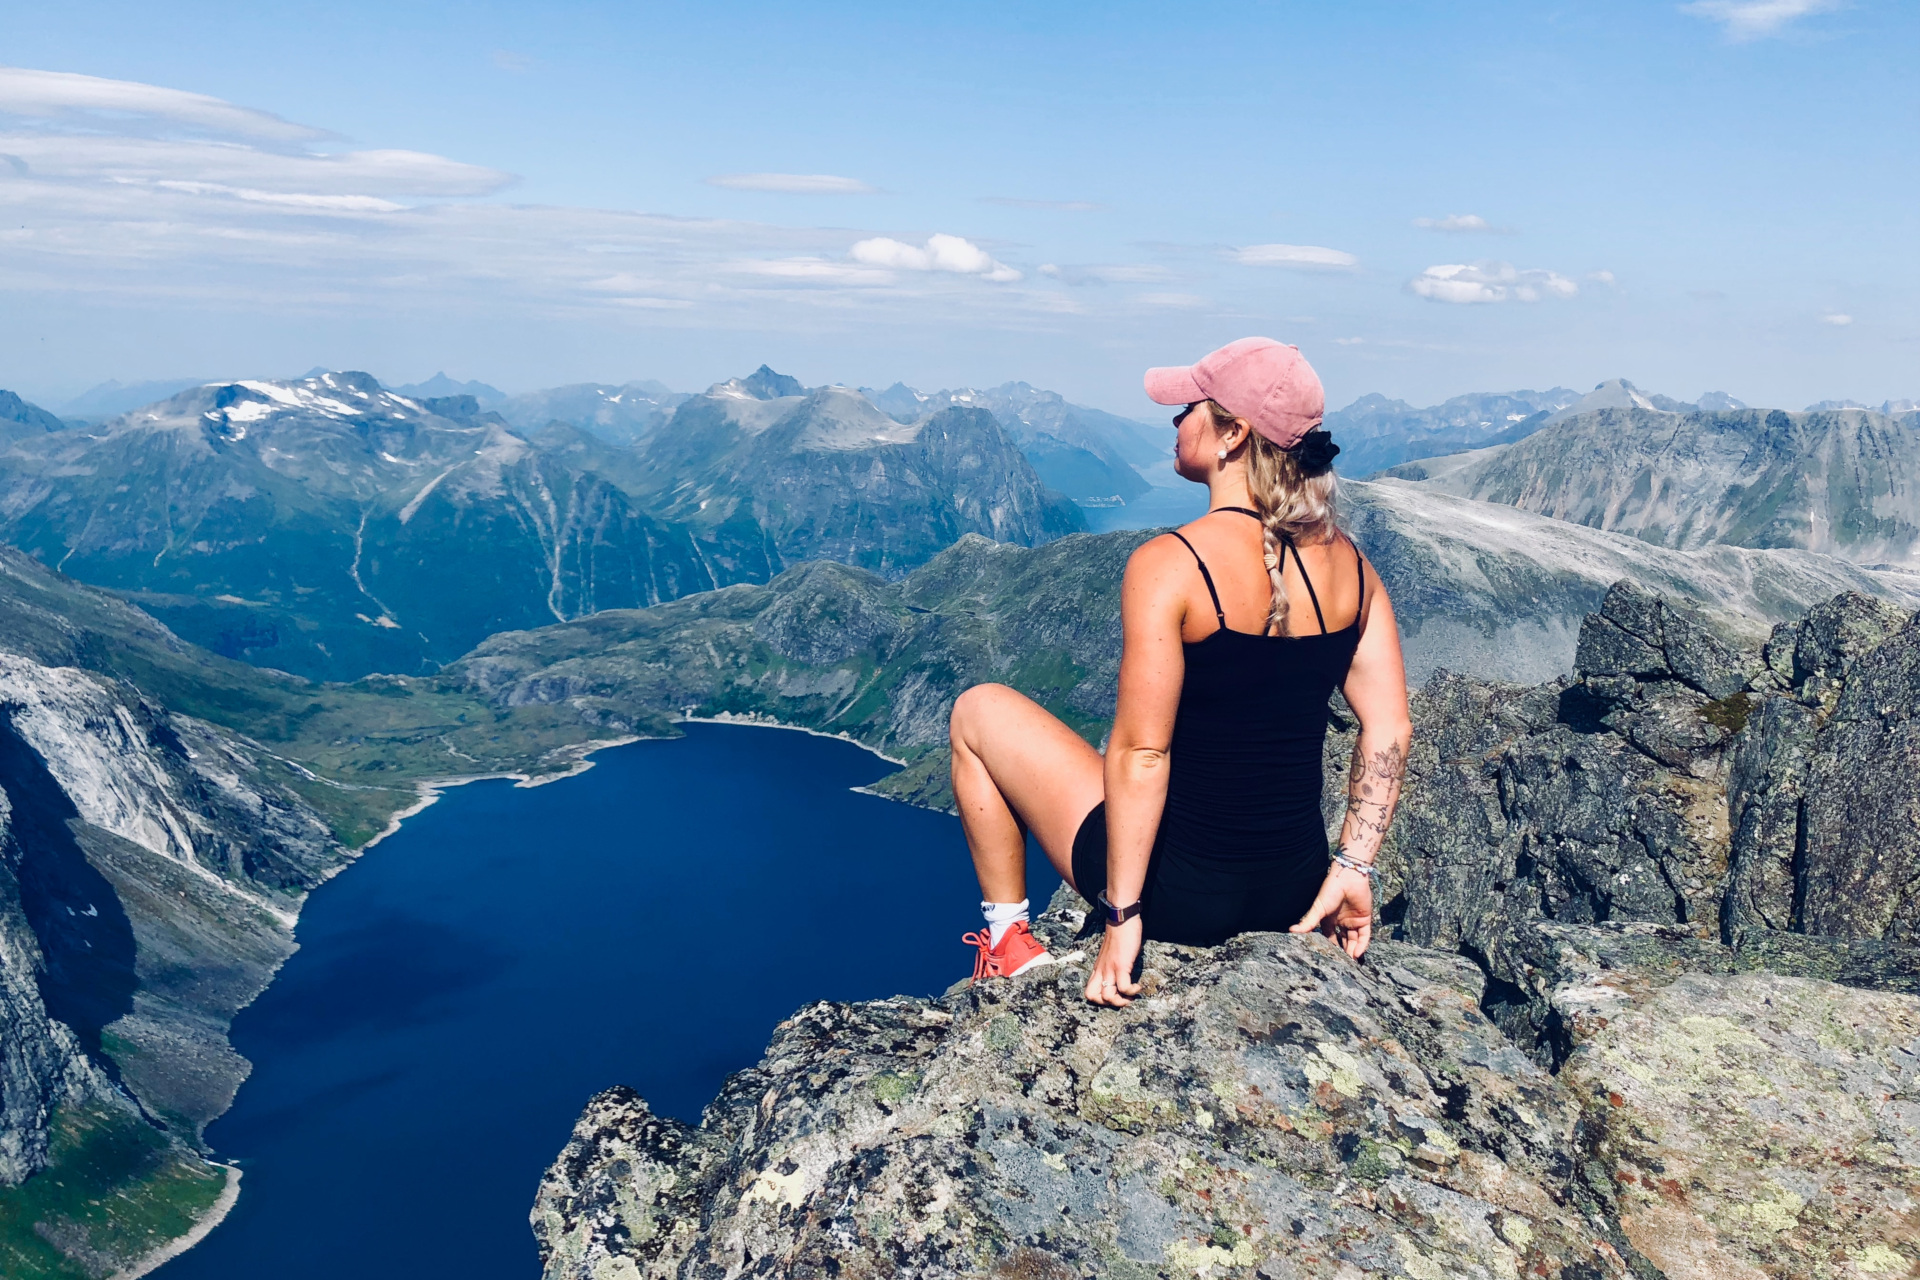 Woman sat on rock overlooking lake